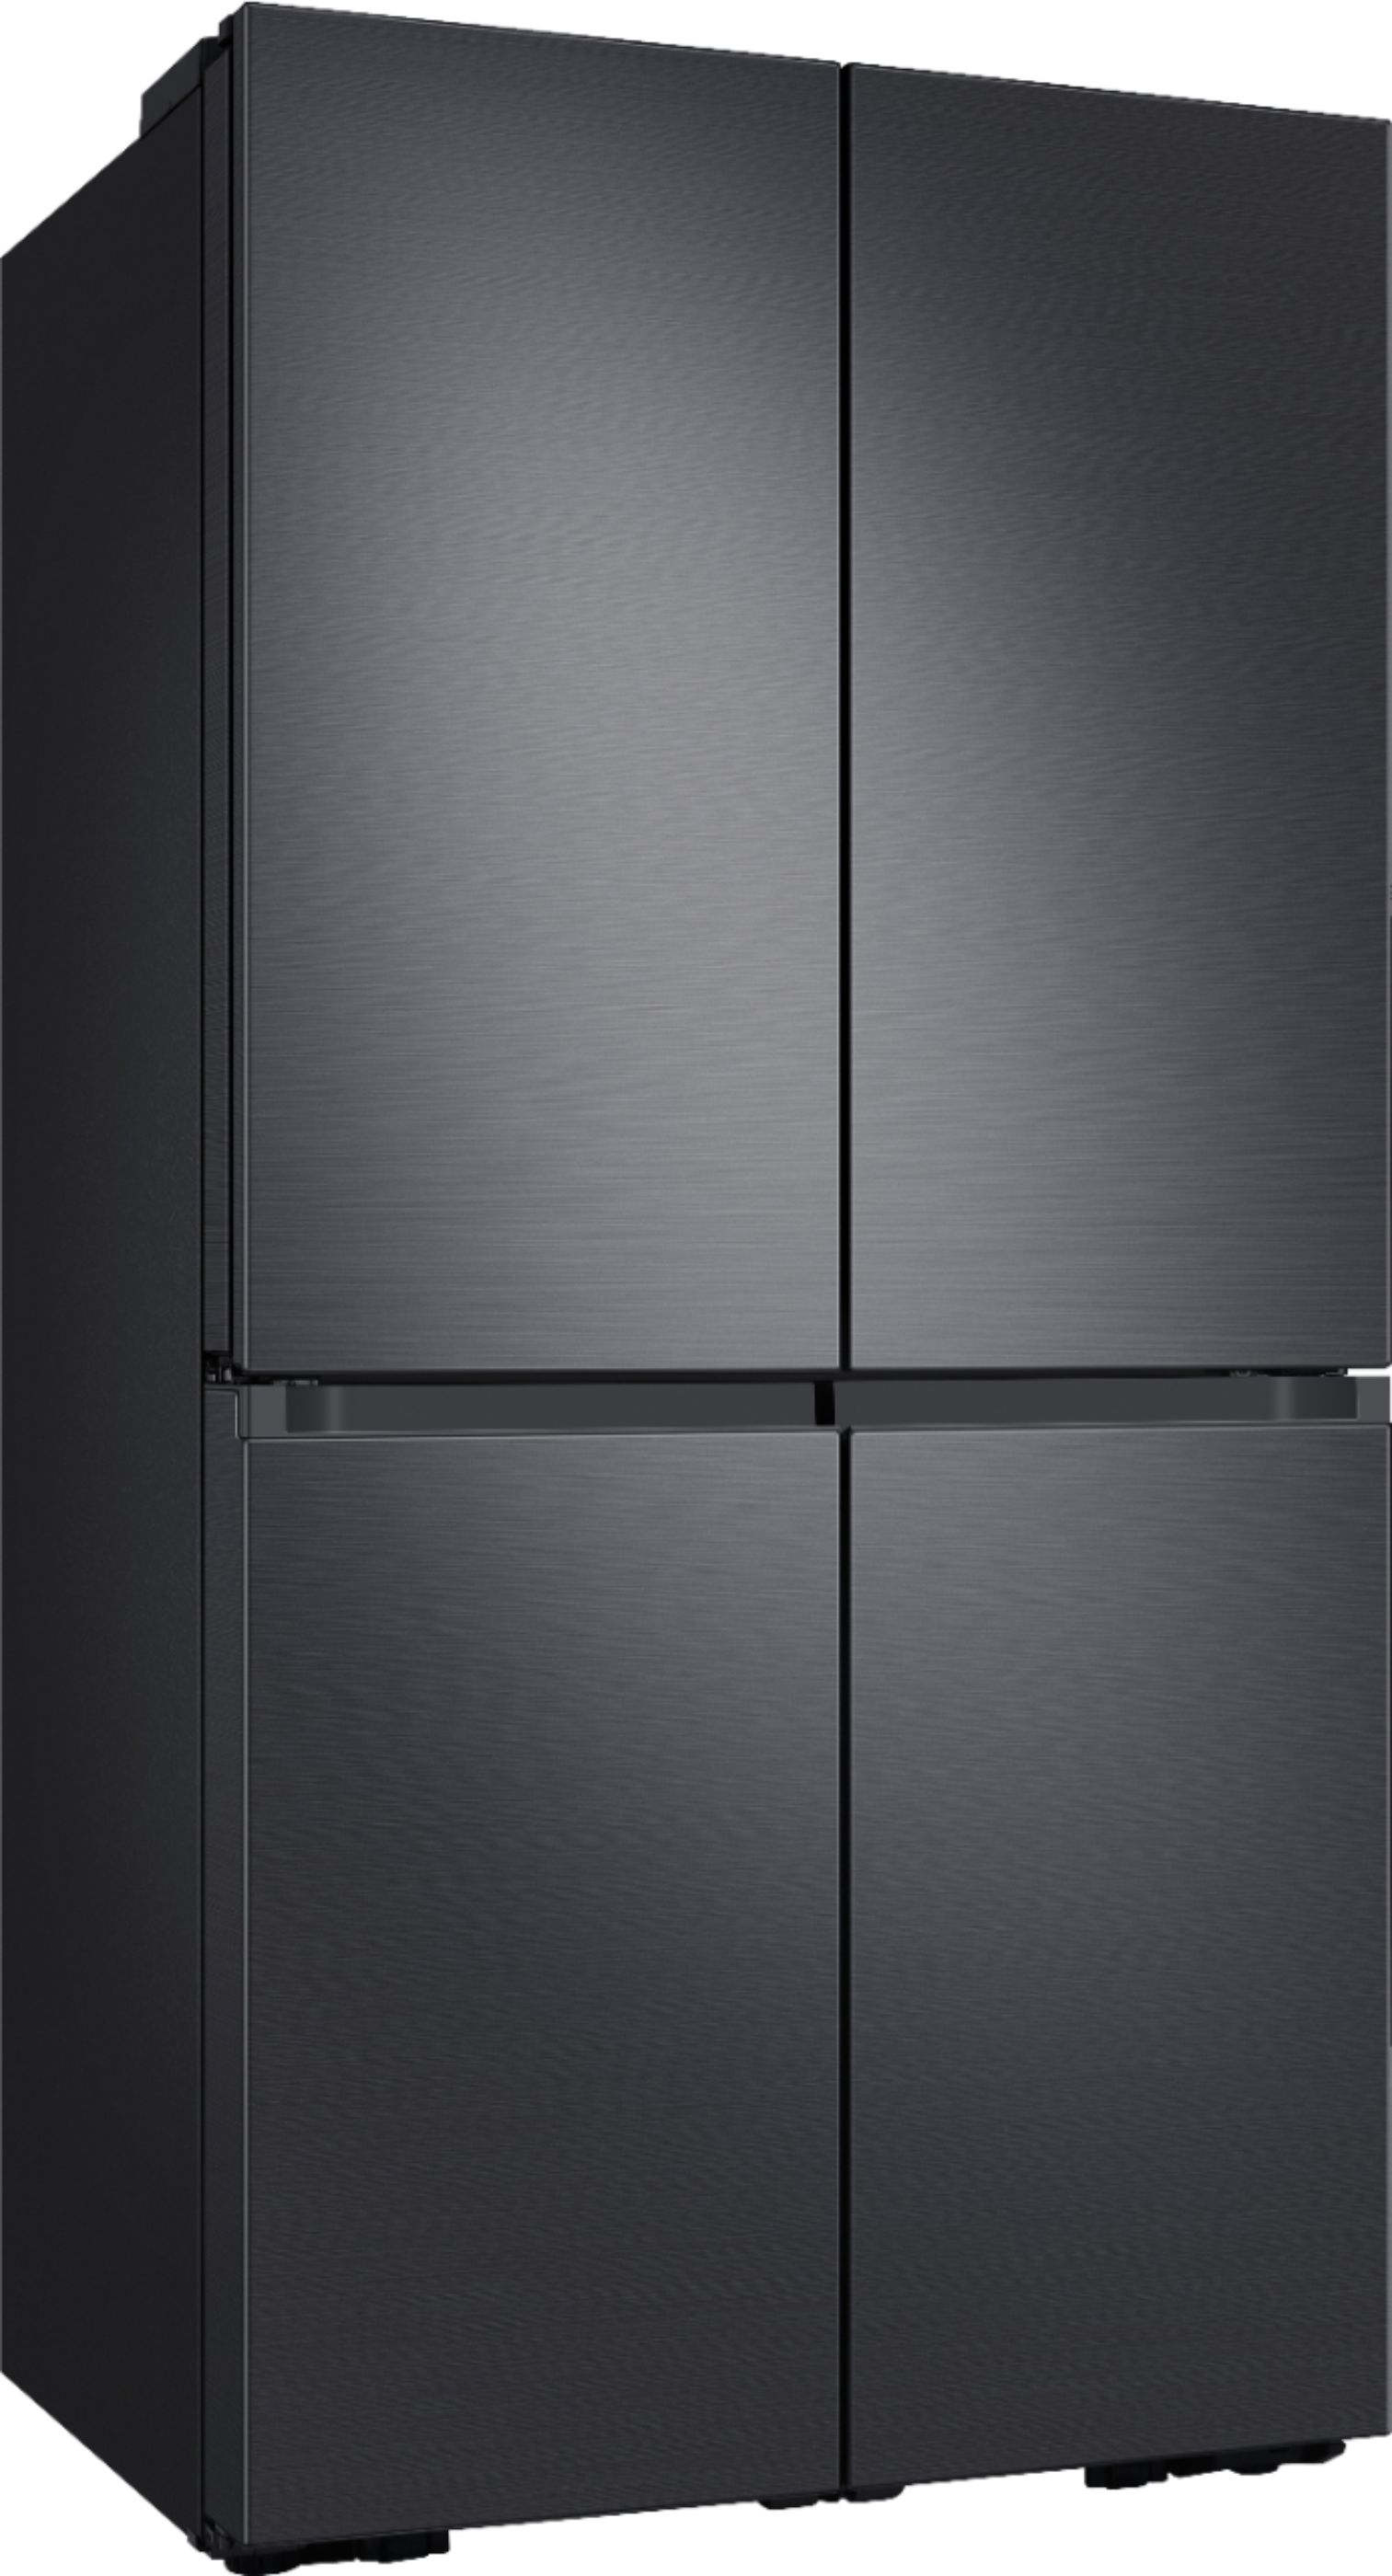 Left View: Samsung - BESPOKE 23 cu. ft. 4-Door Flex French Door Counter Depth Refrigerator with WiFi and Customizable Panel Colors - Navy glass